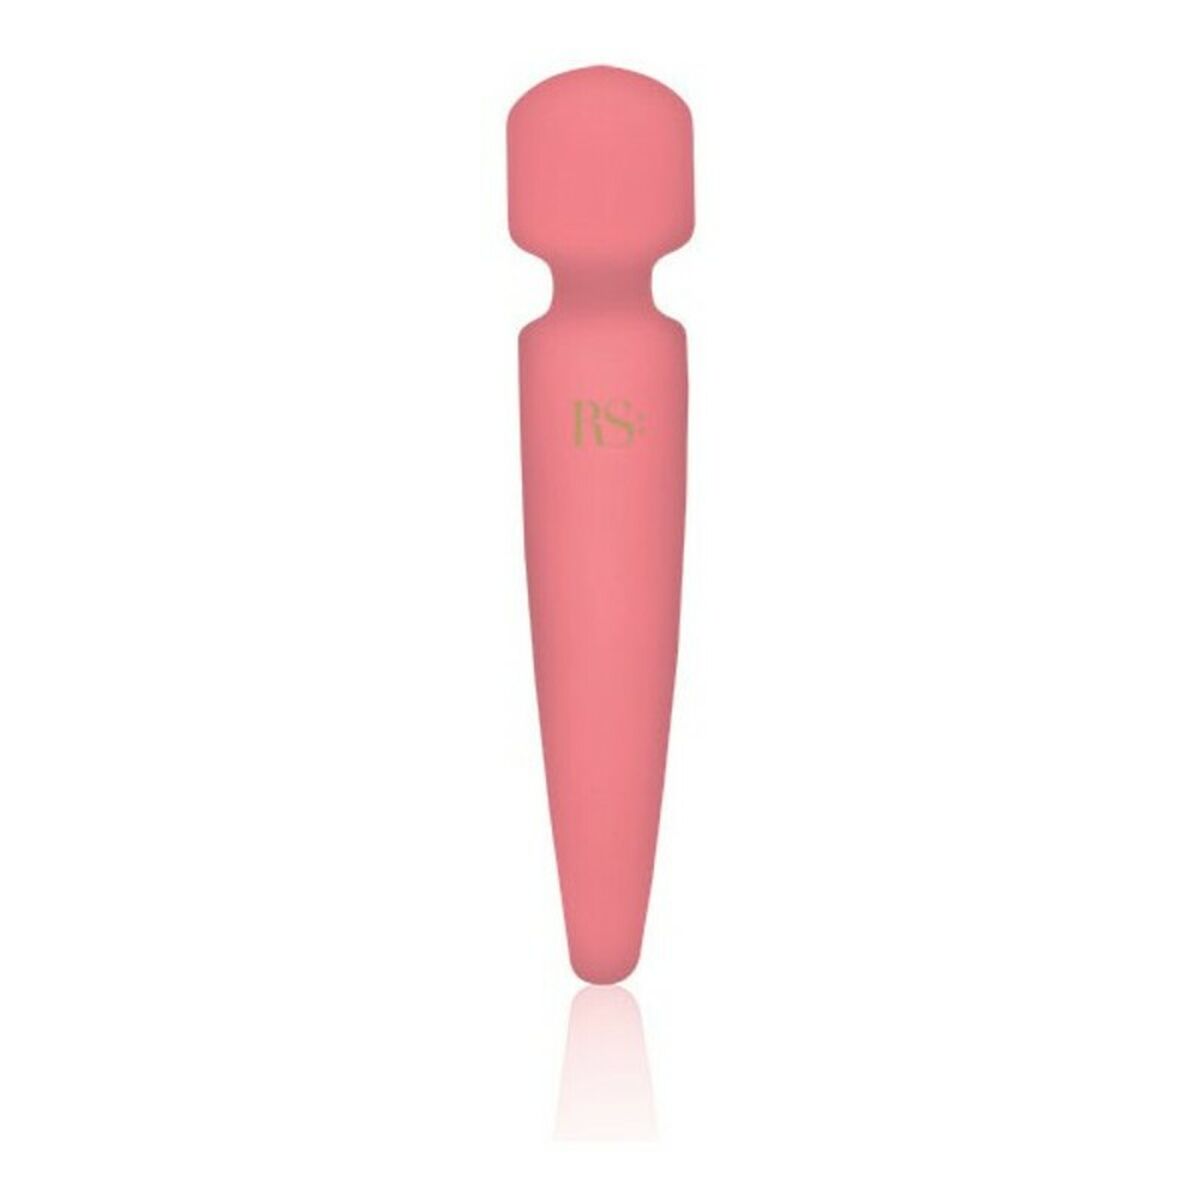 Essentials Bella Mini Body Wand Coral Rianne S E26366 Pink Coral